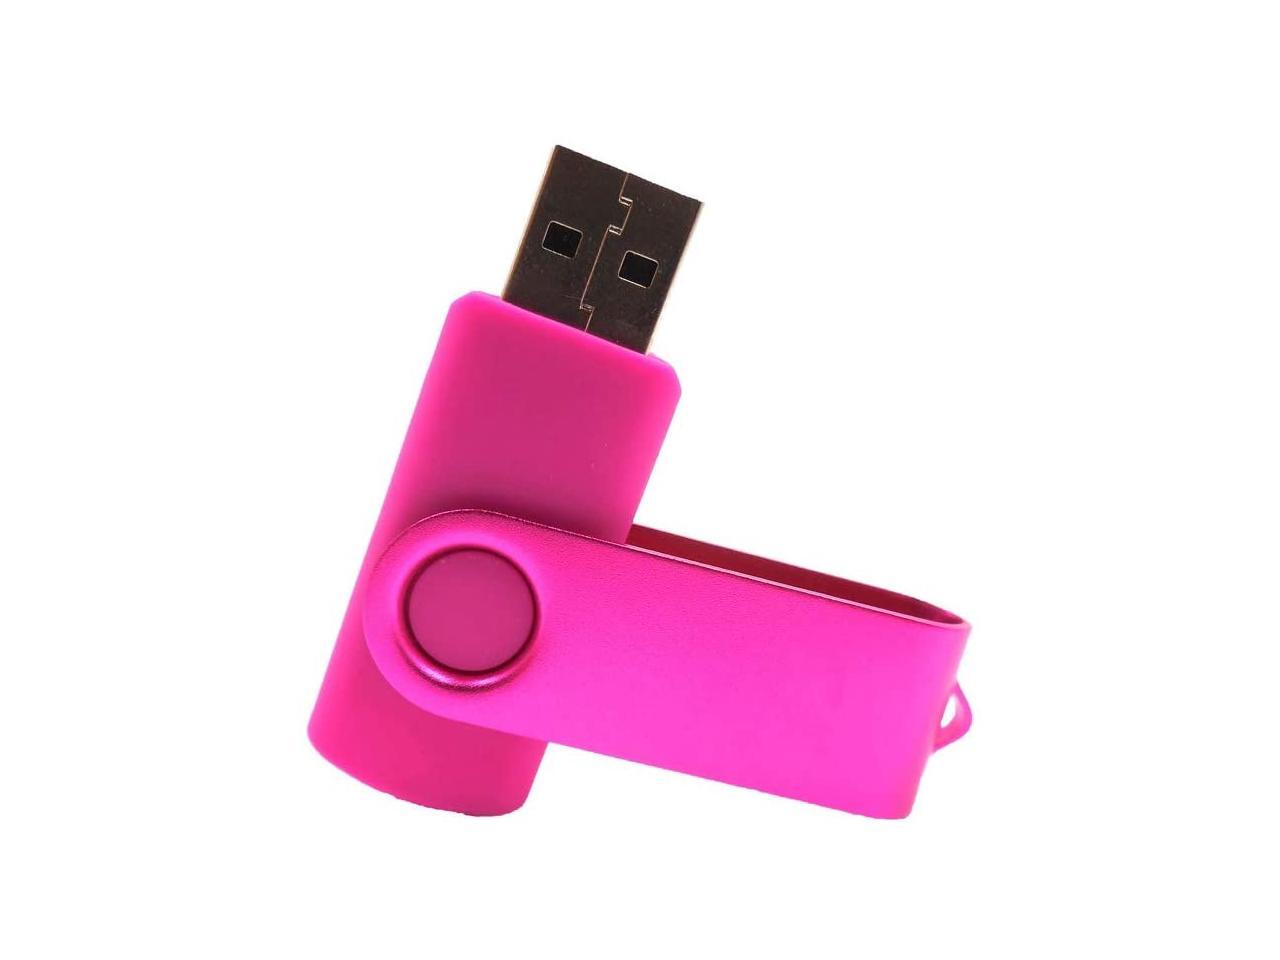 32Gb, Orange 32Gb Swivel USB Flash Drives Thumb Drives Pen Drives Zip Drives with Colored Aluminum Shell 